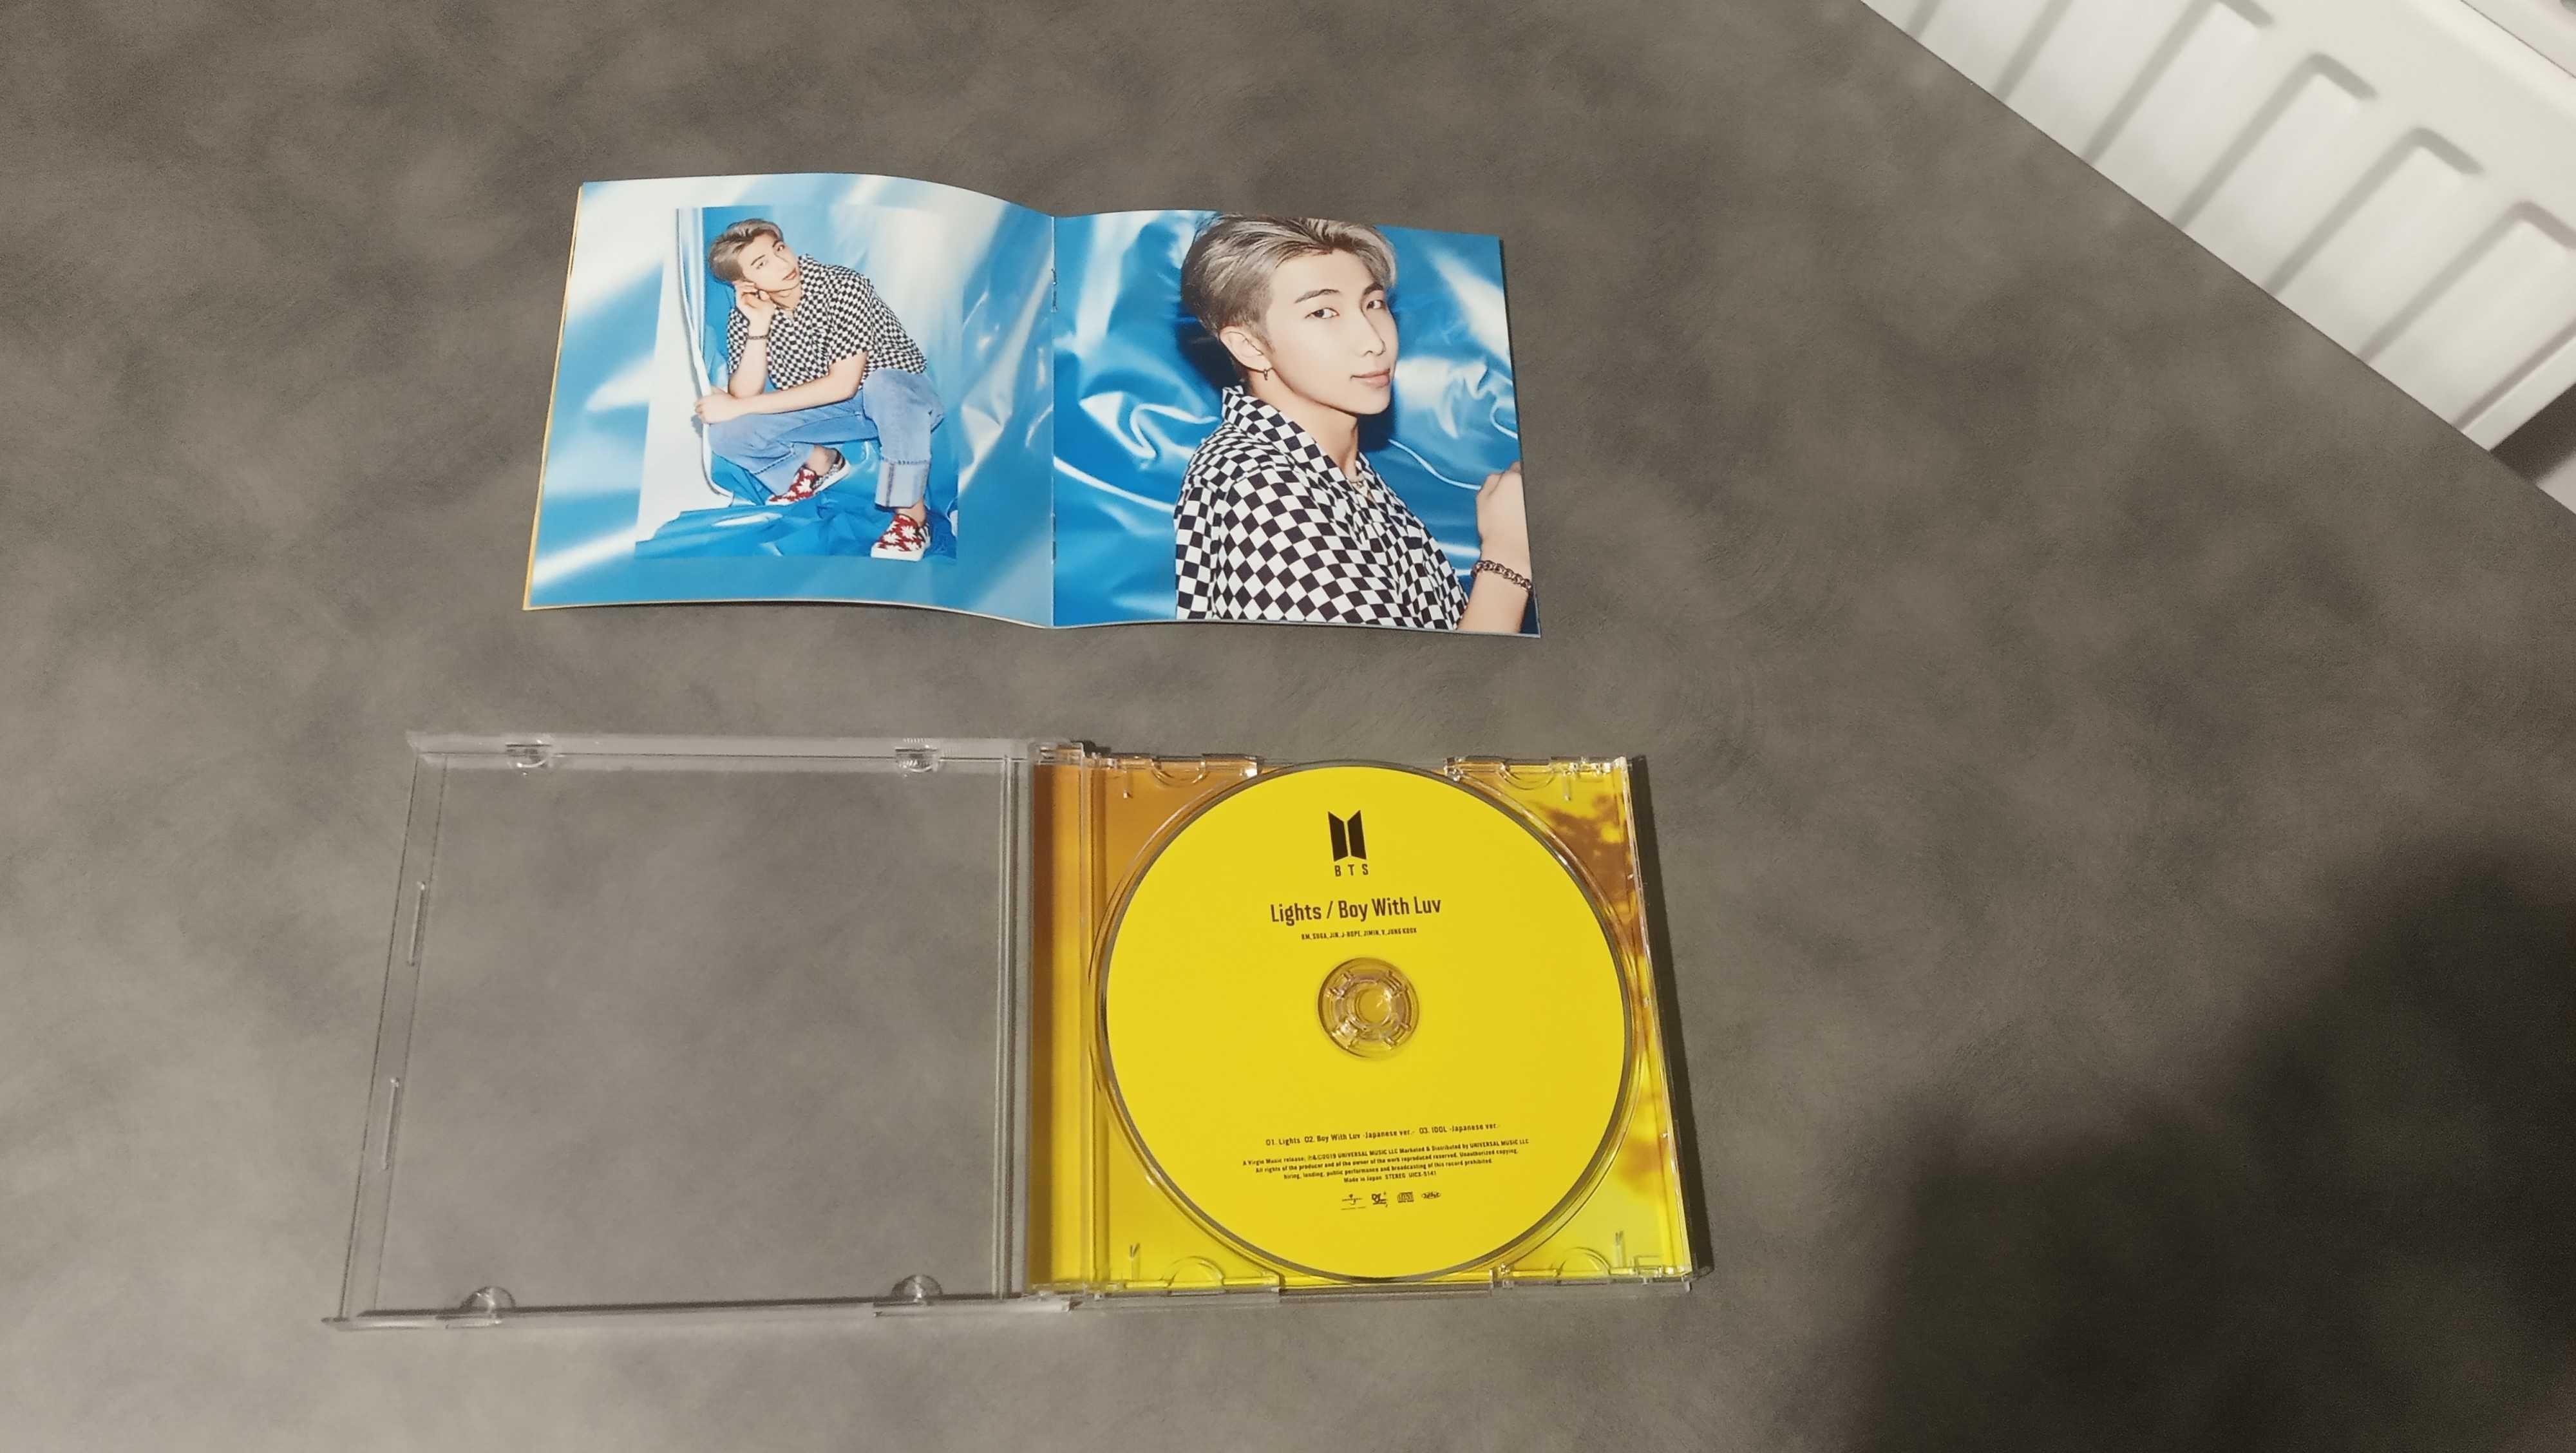 Płyta CD "BTS - LIGHTS / Boy With Luv"